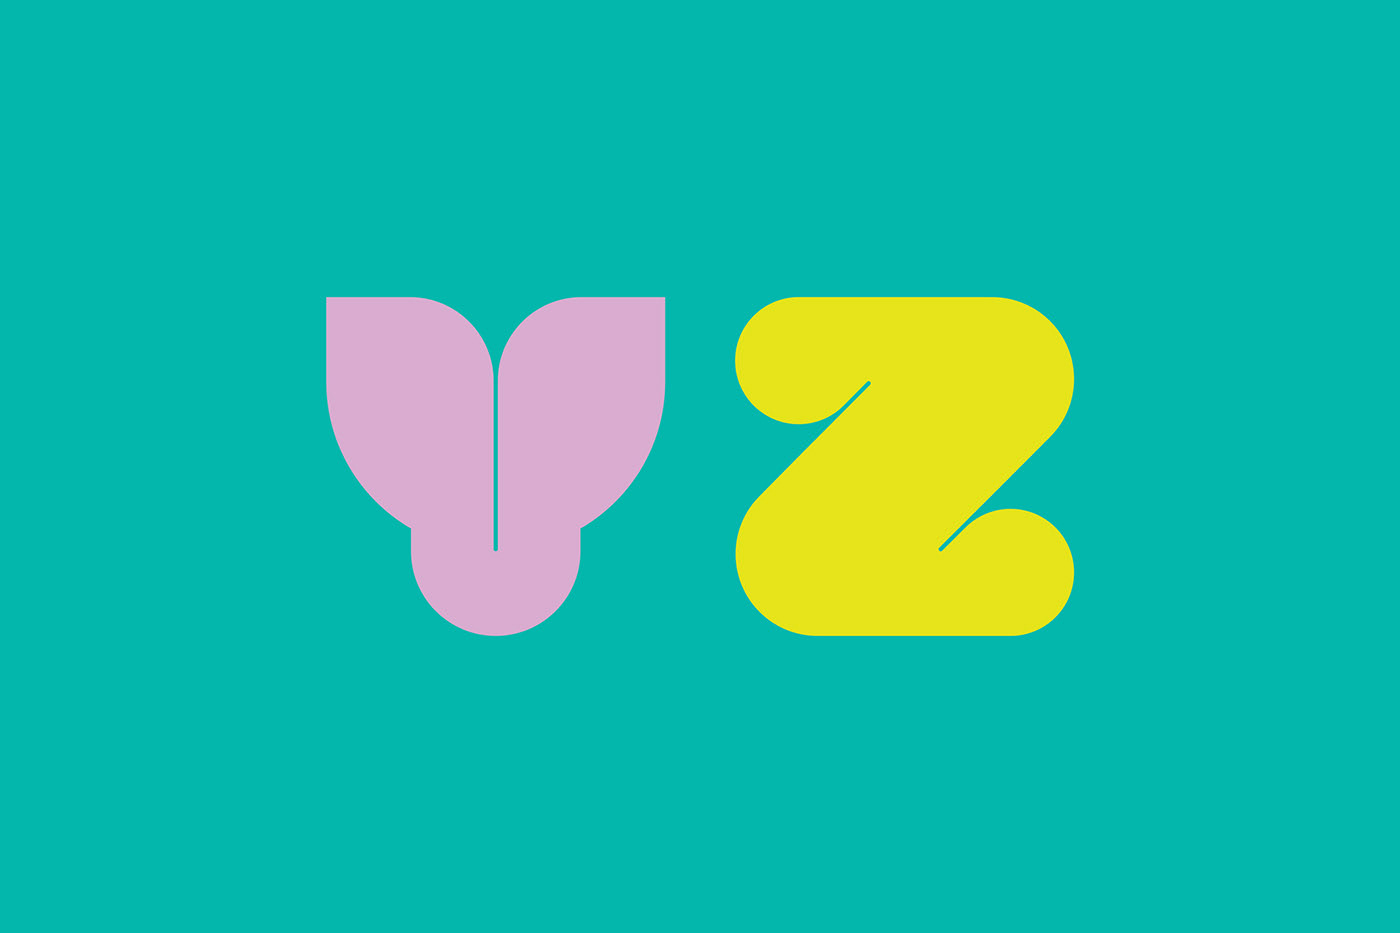 YZ in Tanga font designed by Deborah Ranzetta